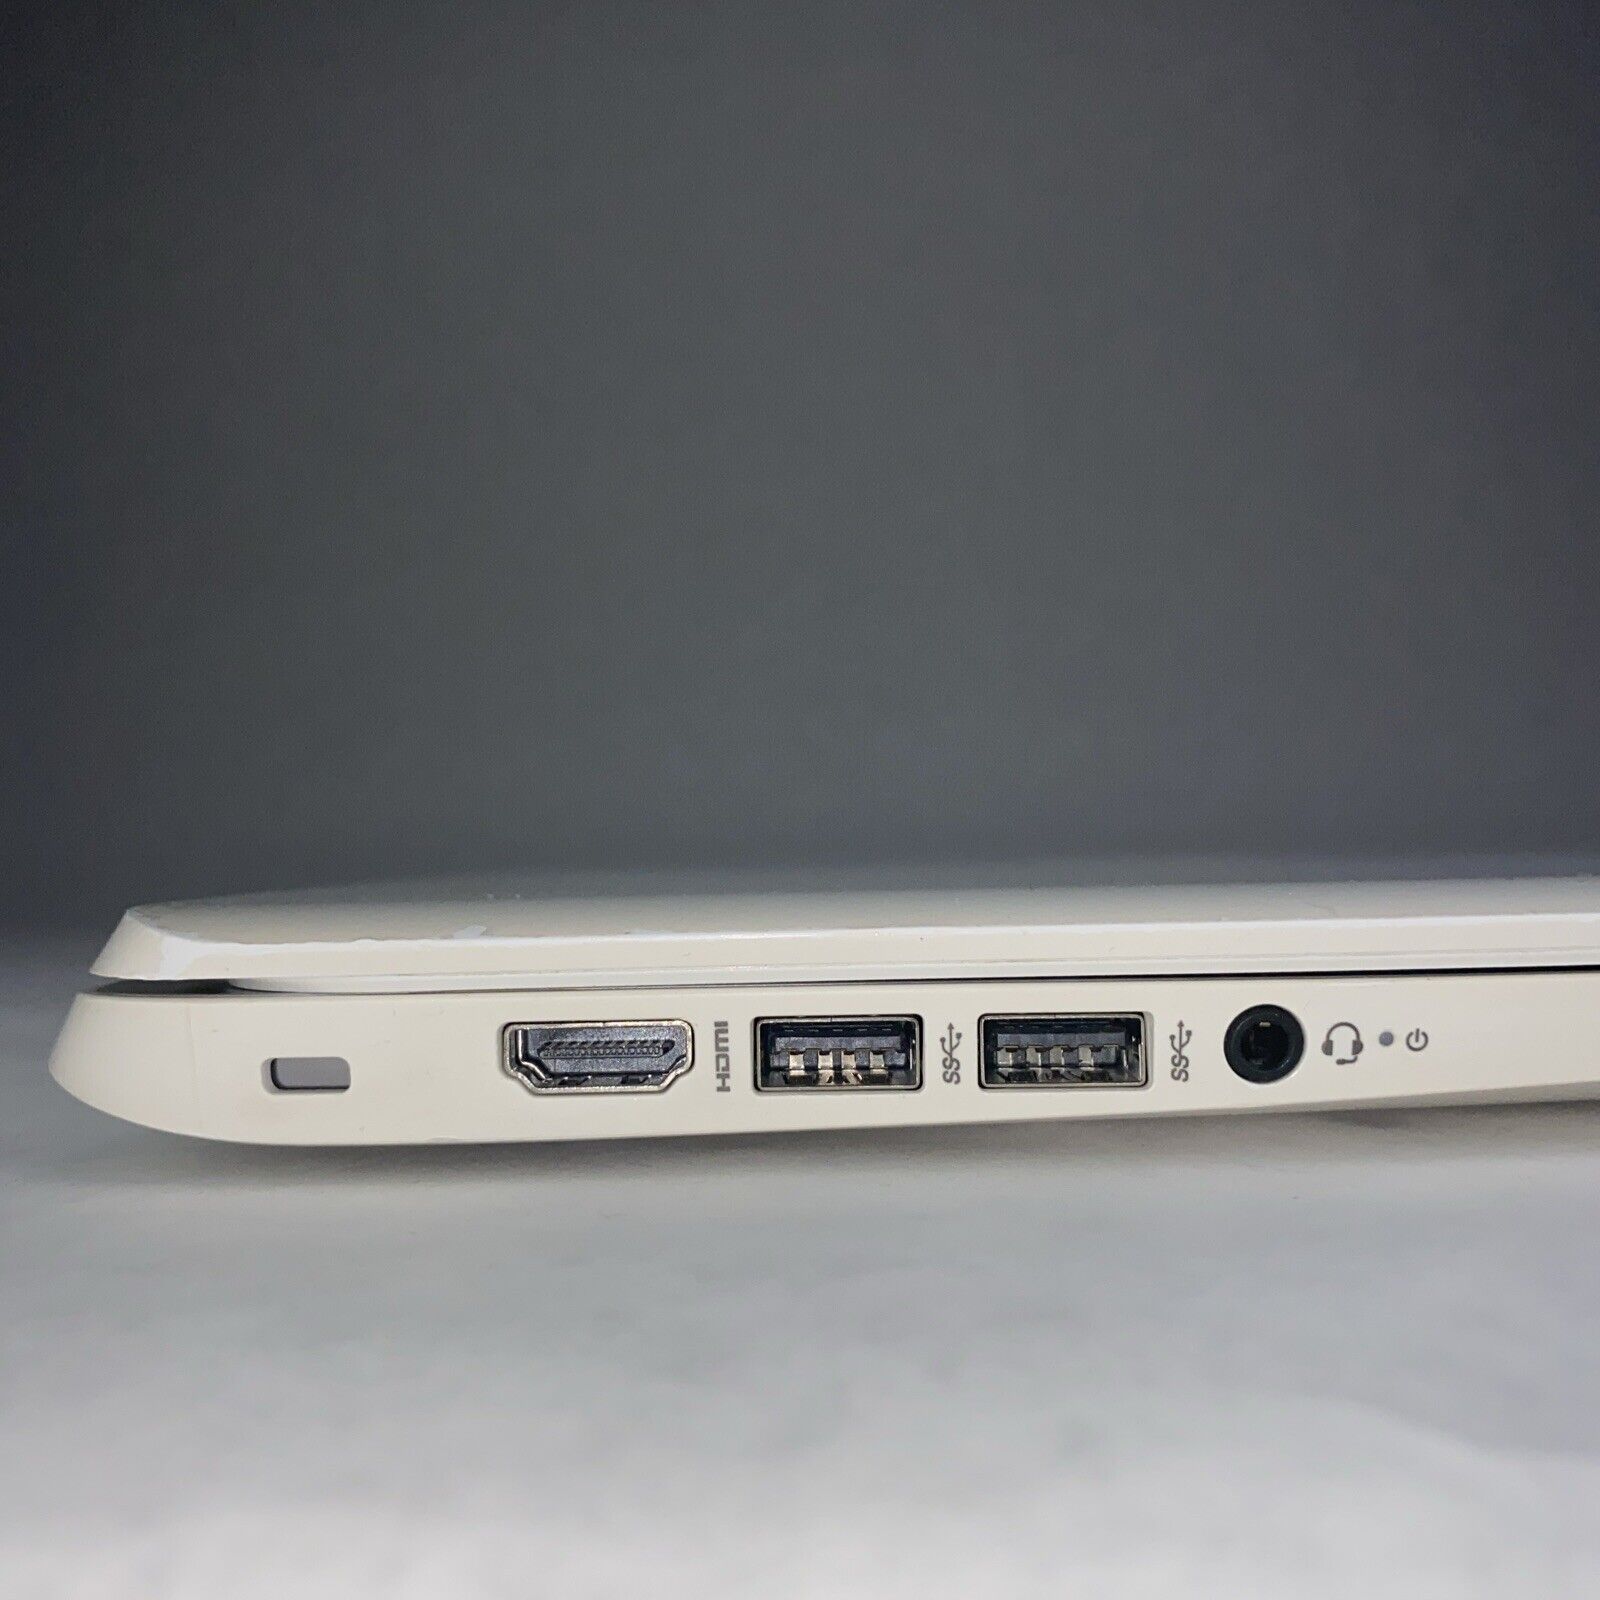 HP ChromeBook 14-SMB Intel Celeron 2955U 1.40GHz 4GB RAM 16GB eMMC AC Adapter